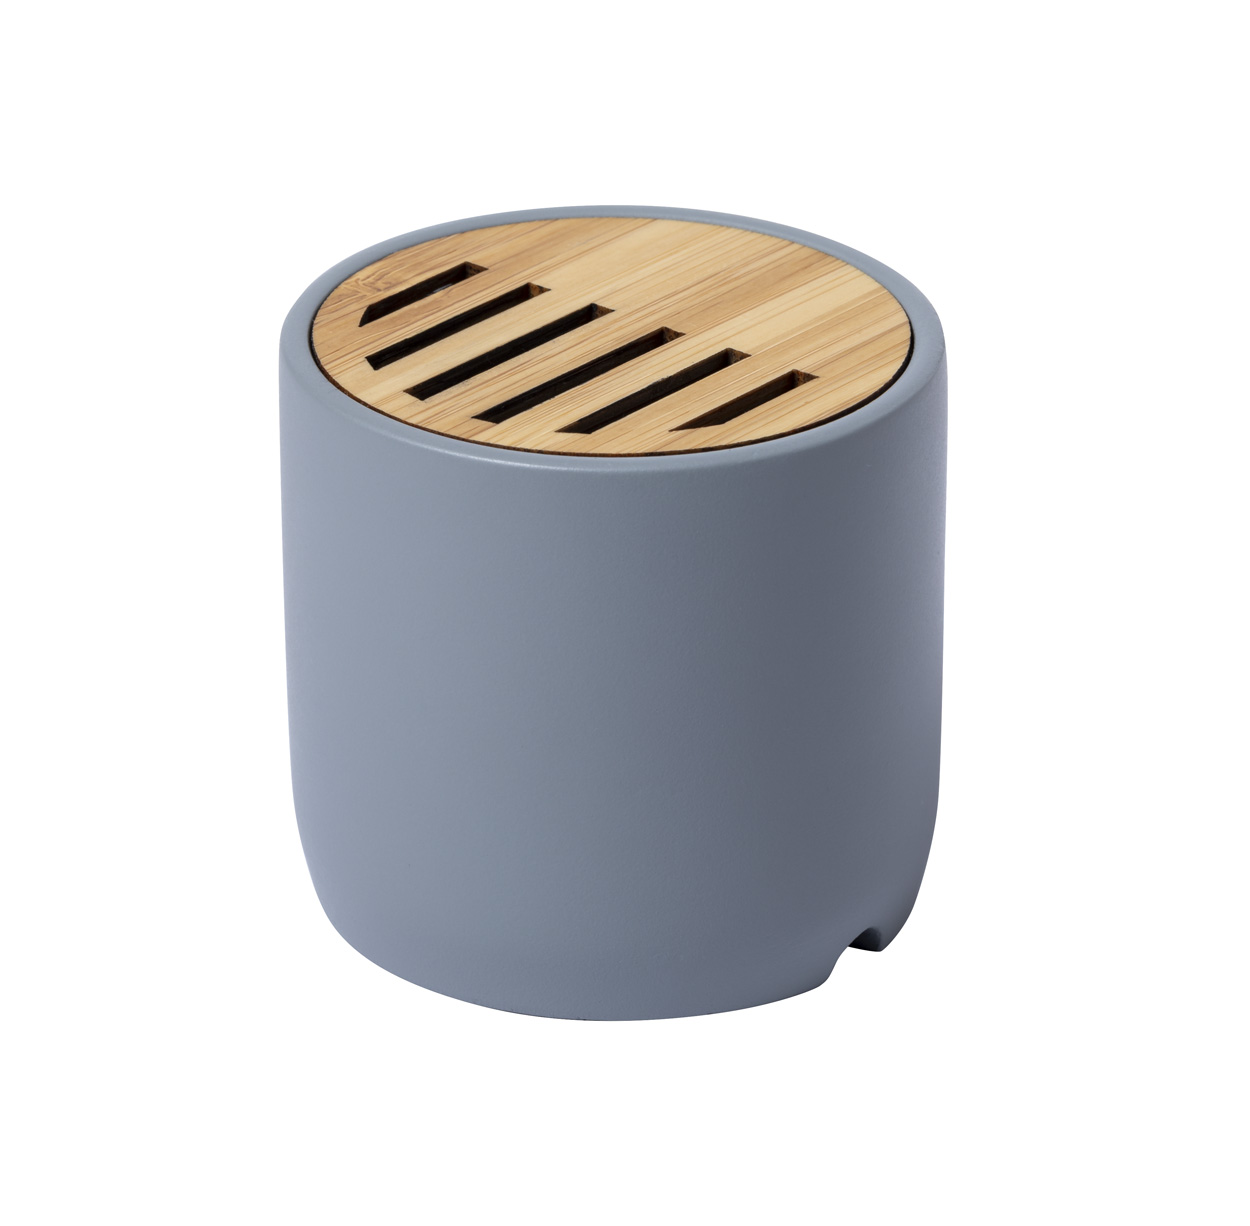 Piler bluetooth speaker - grey